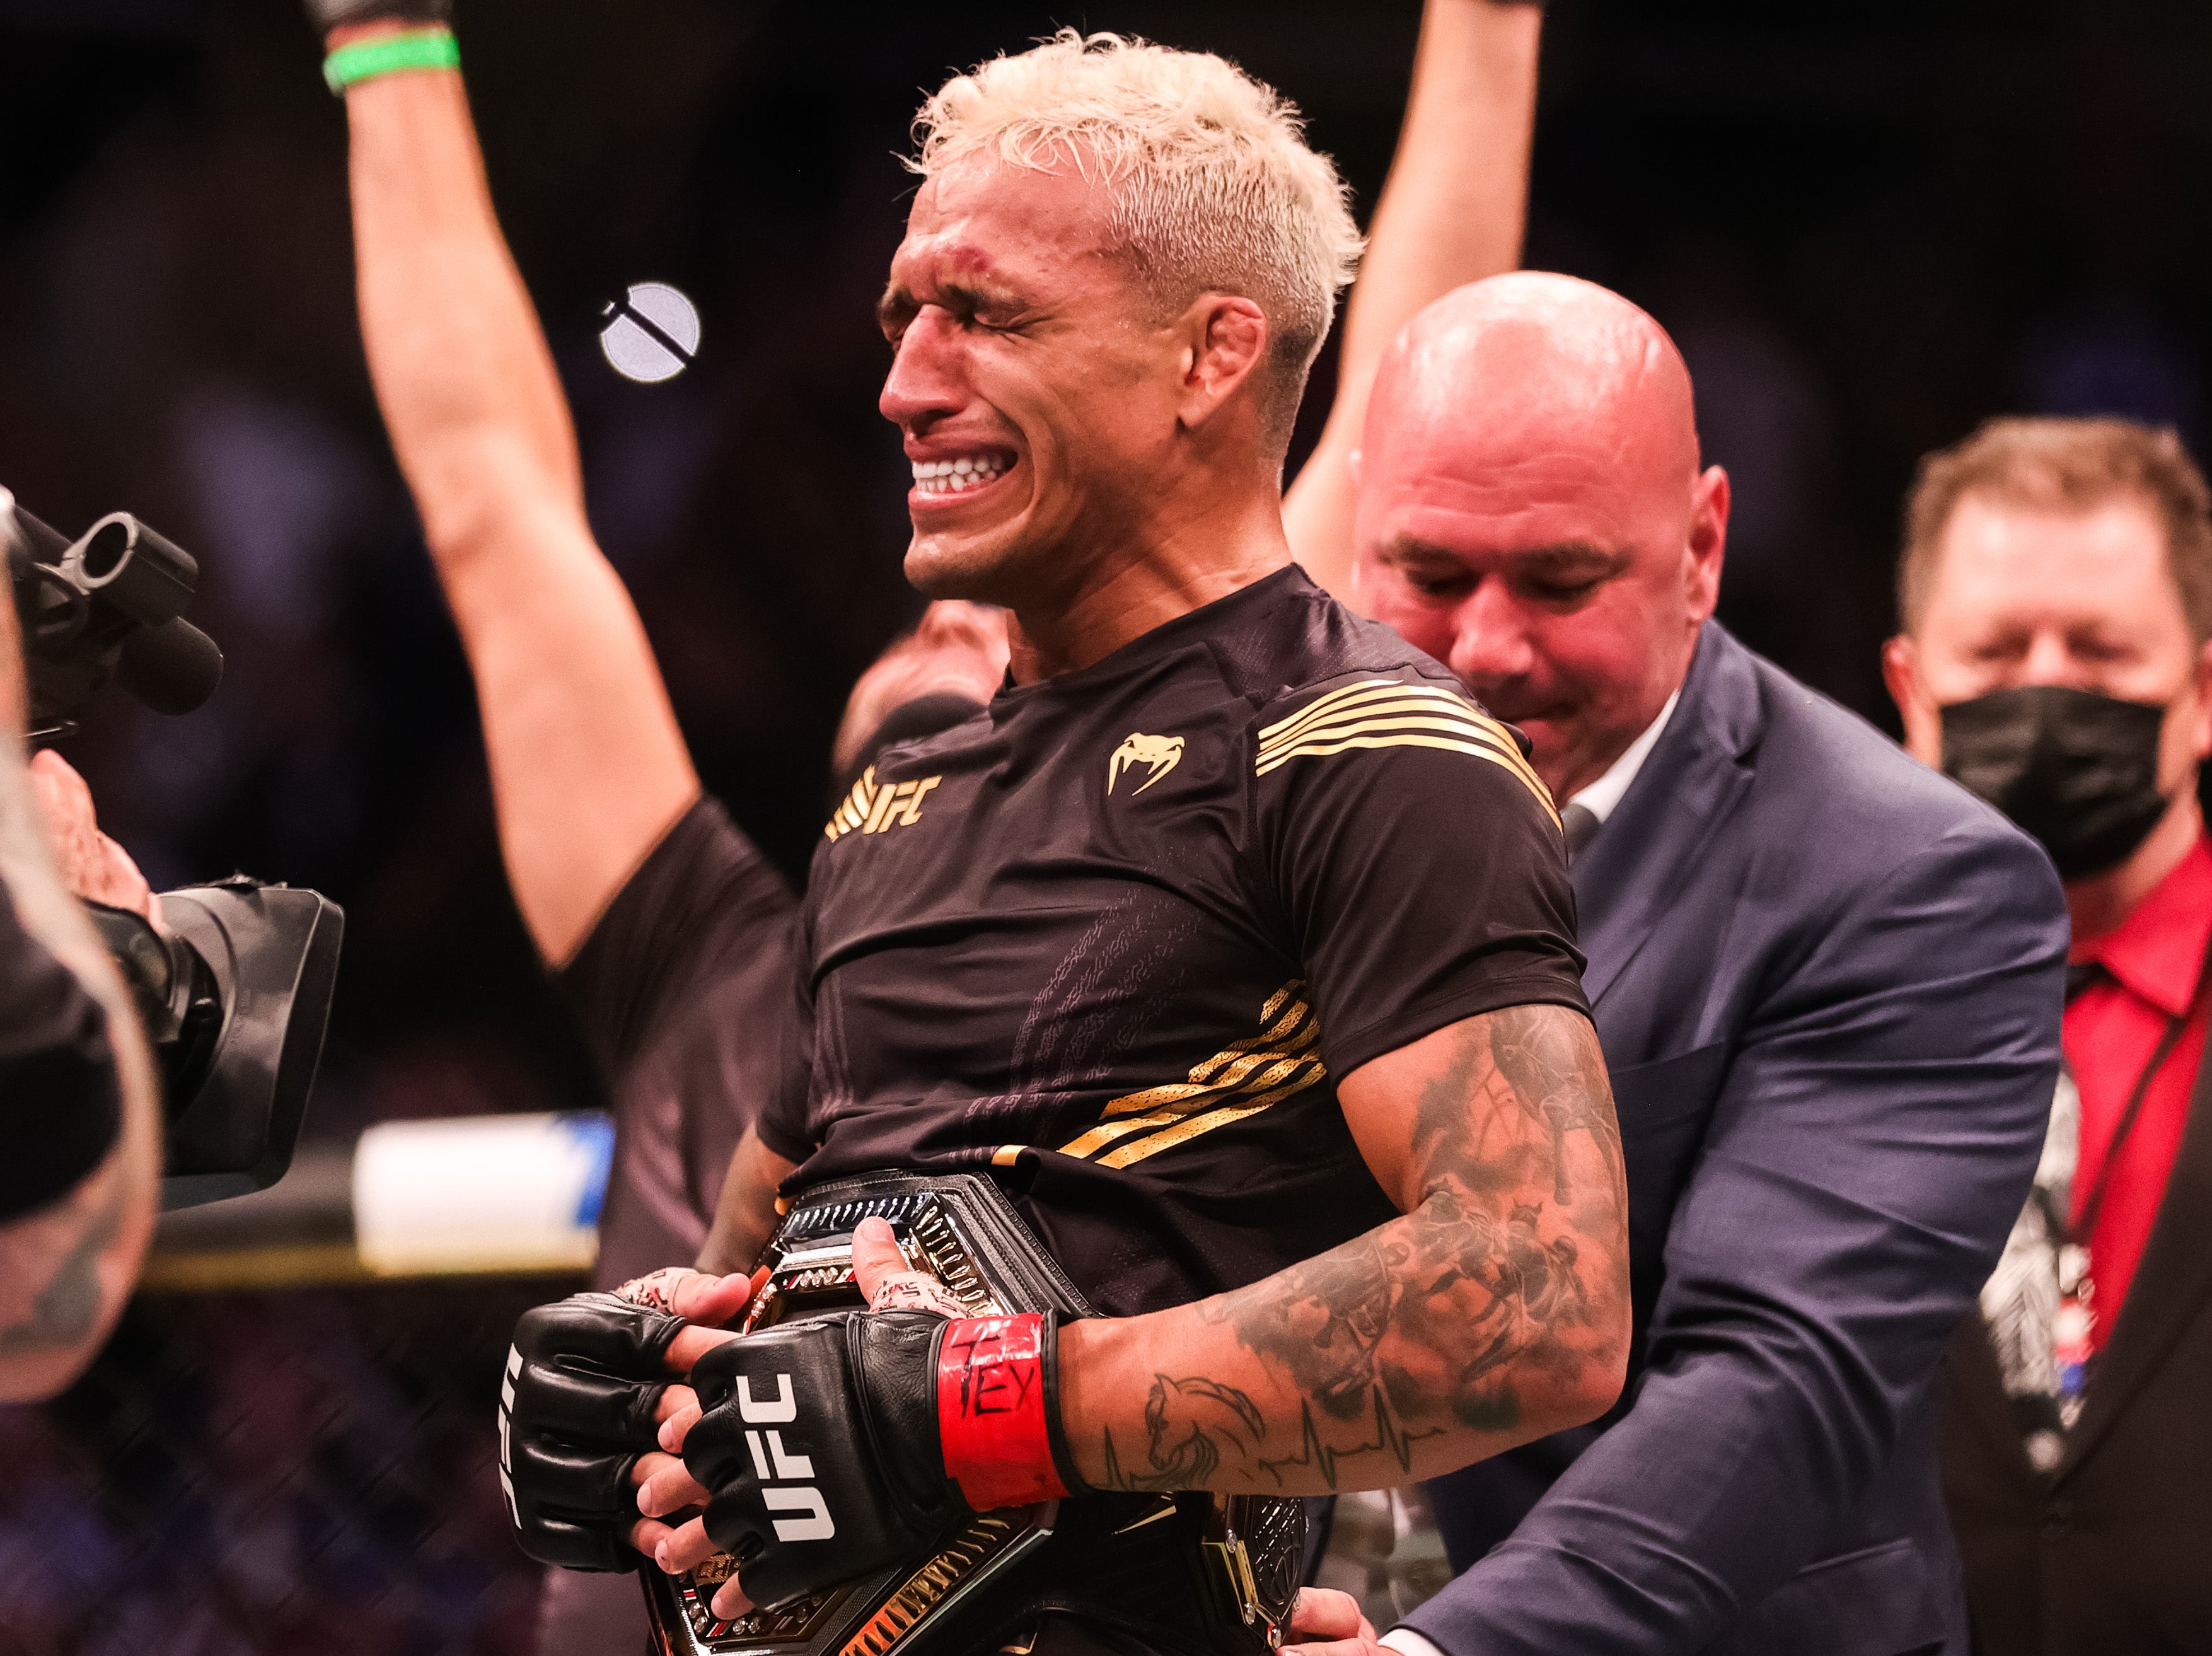 Oliveira captured the vacant UFC lightweight title at UFC 262